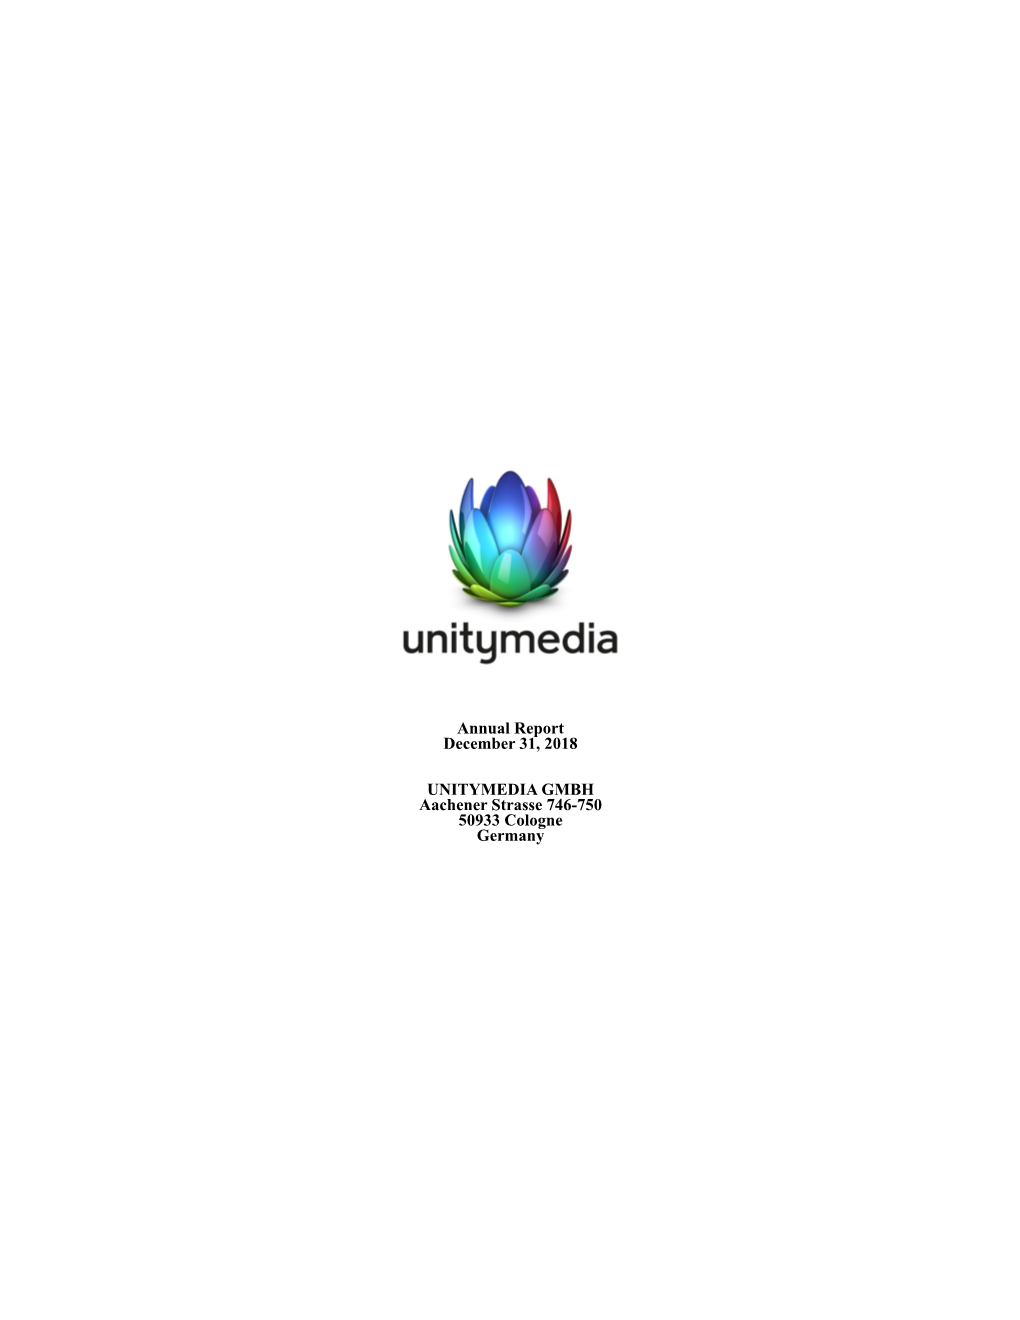 Unitymedia Q4 2018 Report